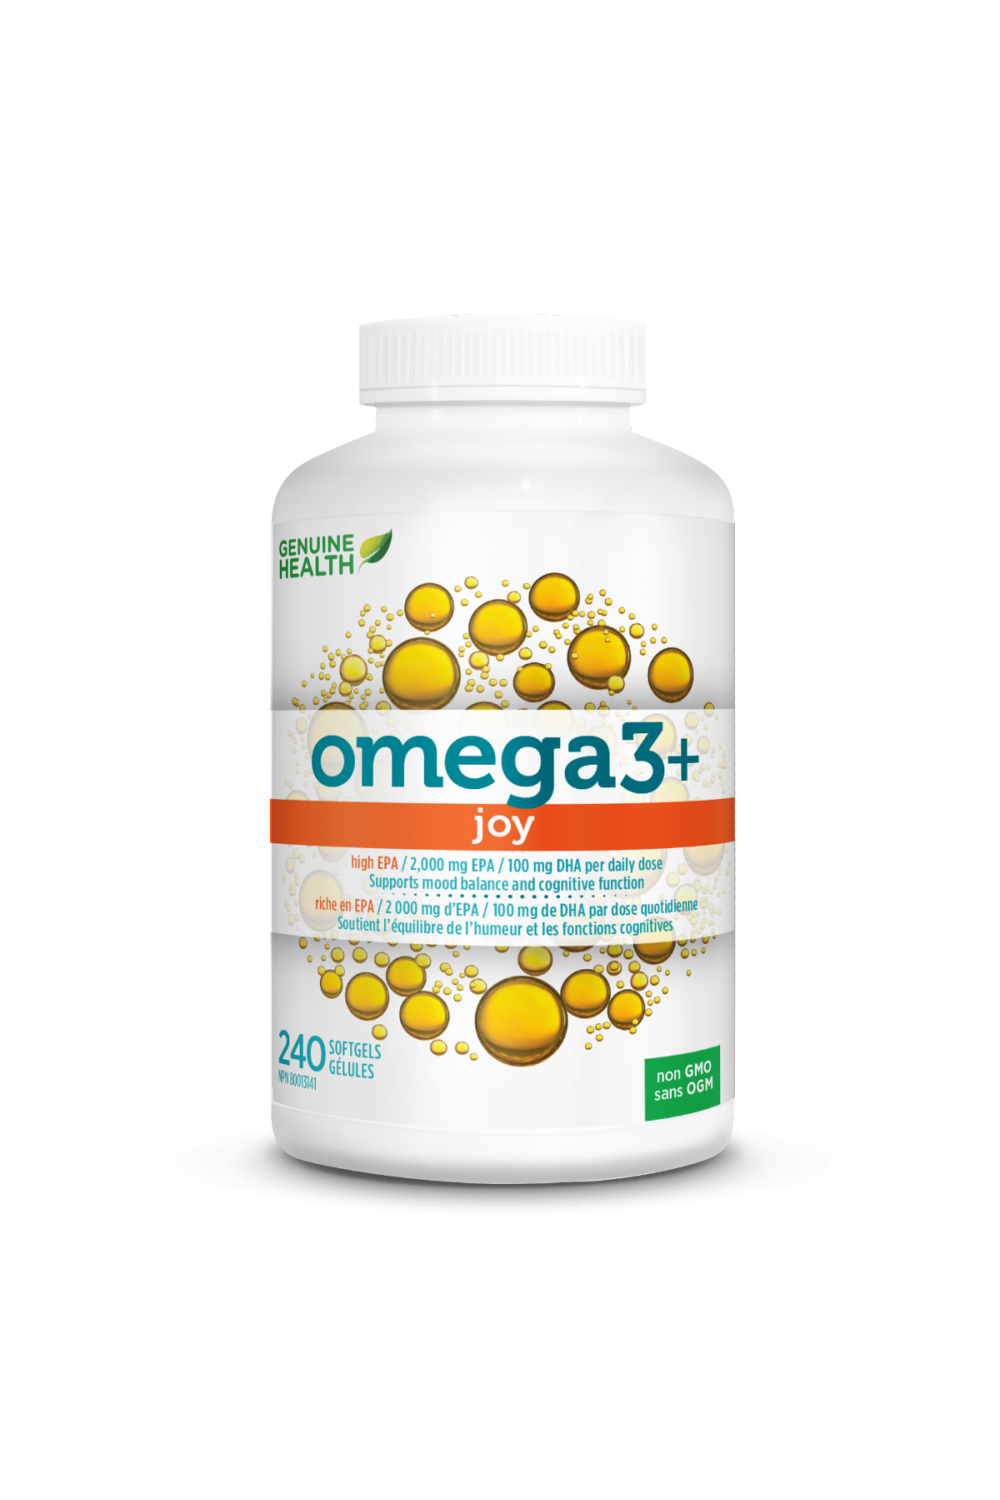 Genuine Health Omega3+ Joy 240s